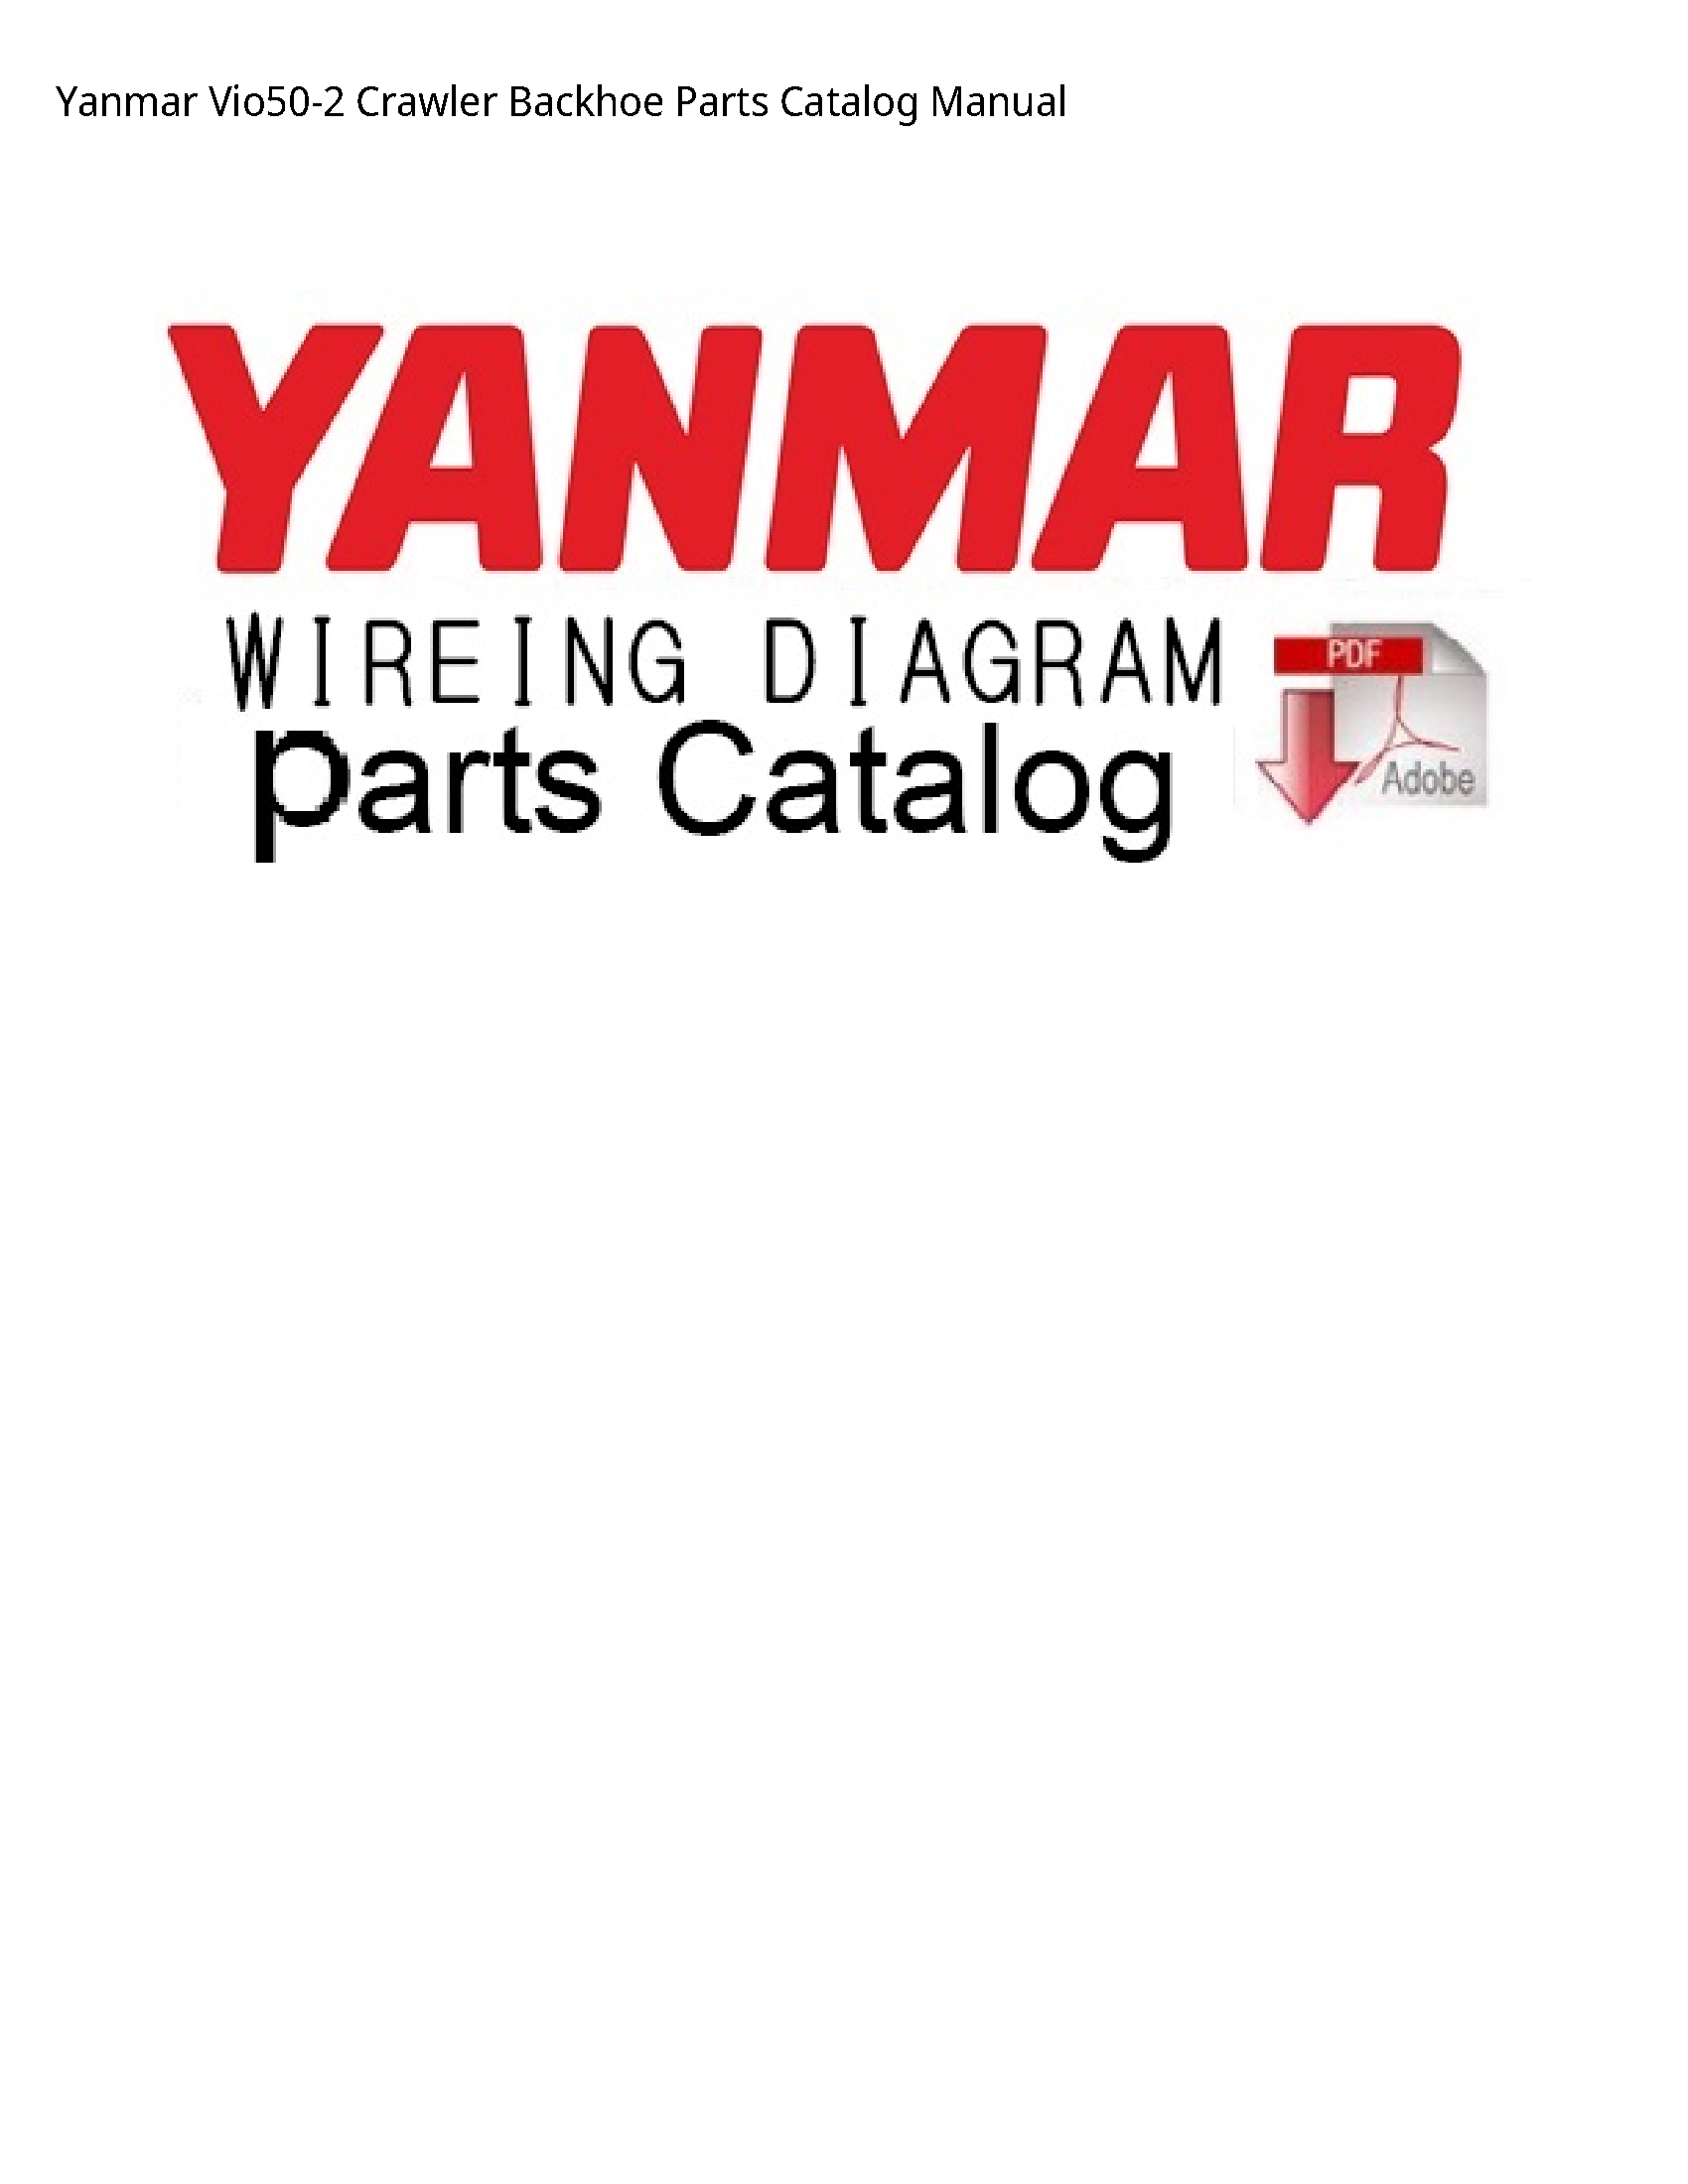 Yanmar Vio50-2 Crawler Backhoe Parts Catalog manual